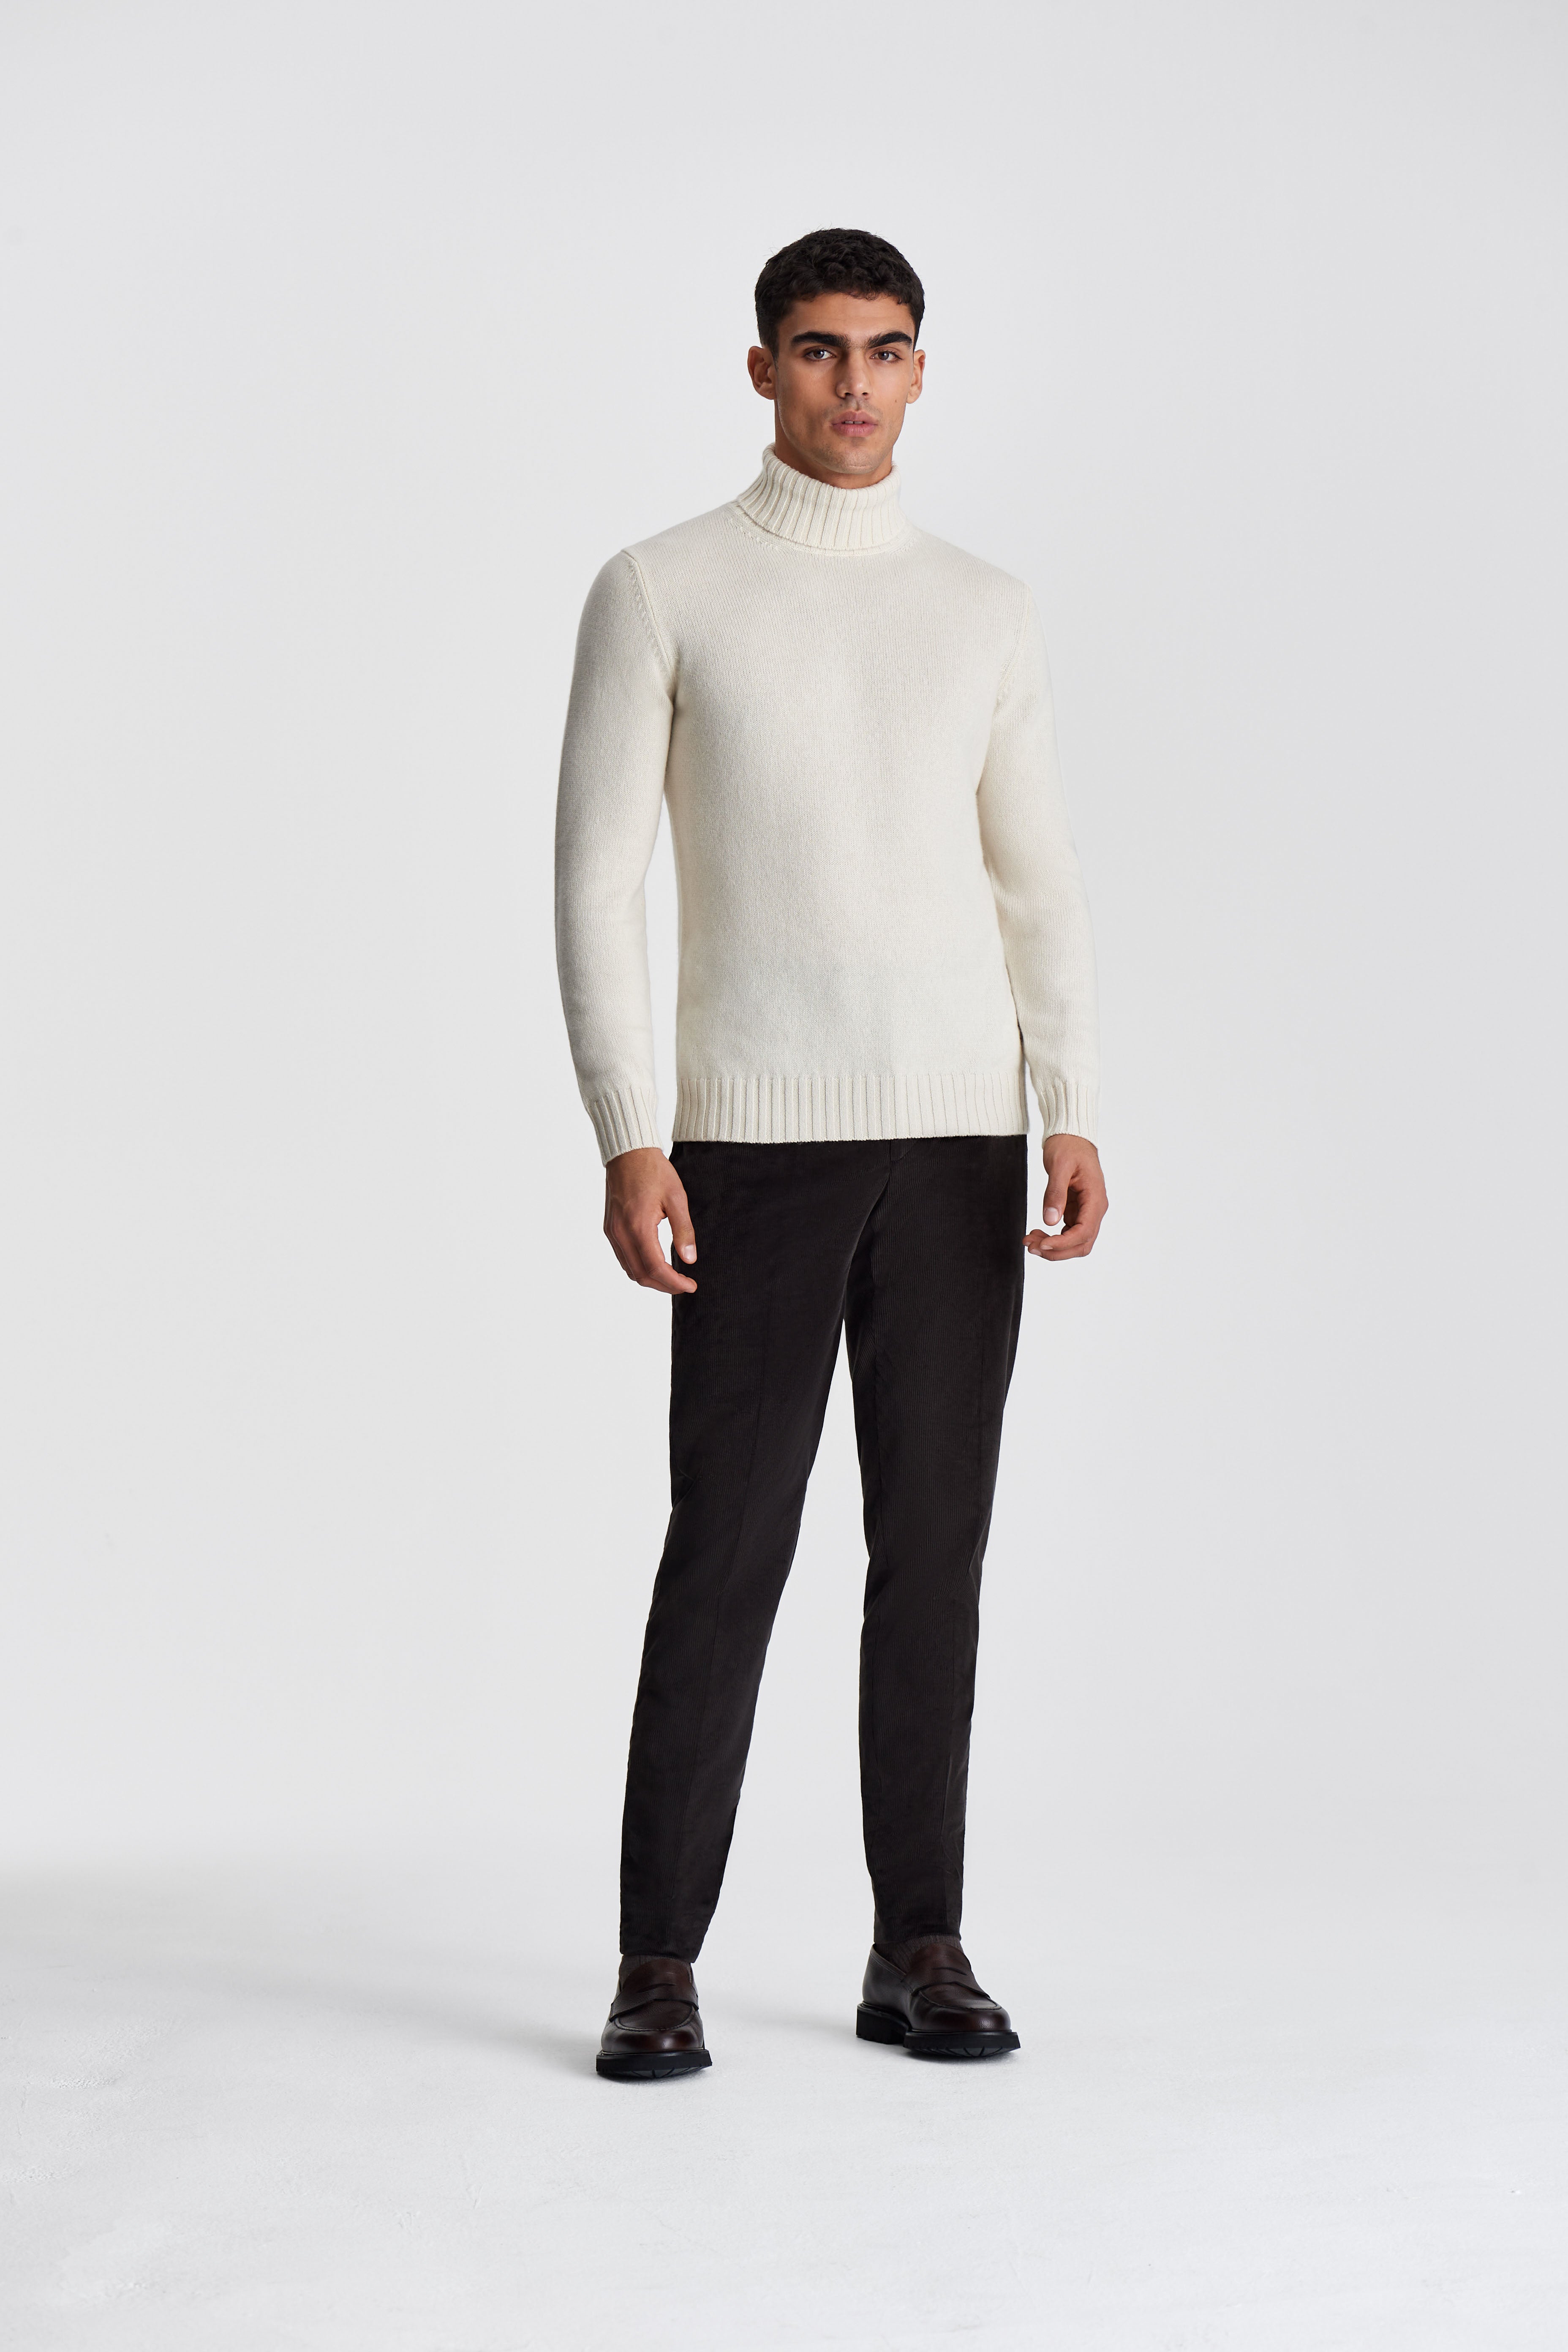 Cashmere Roll Neck Sweater Off White Model Image Full Length